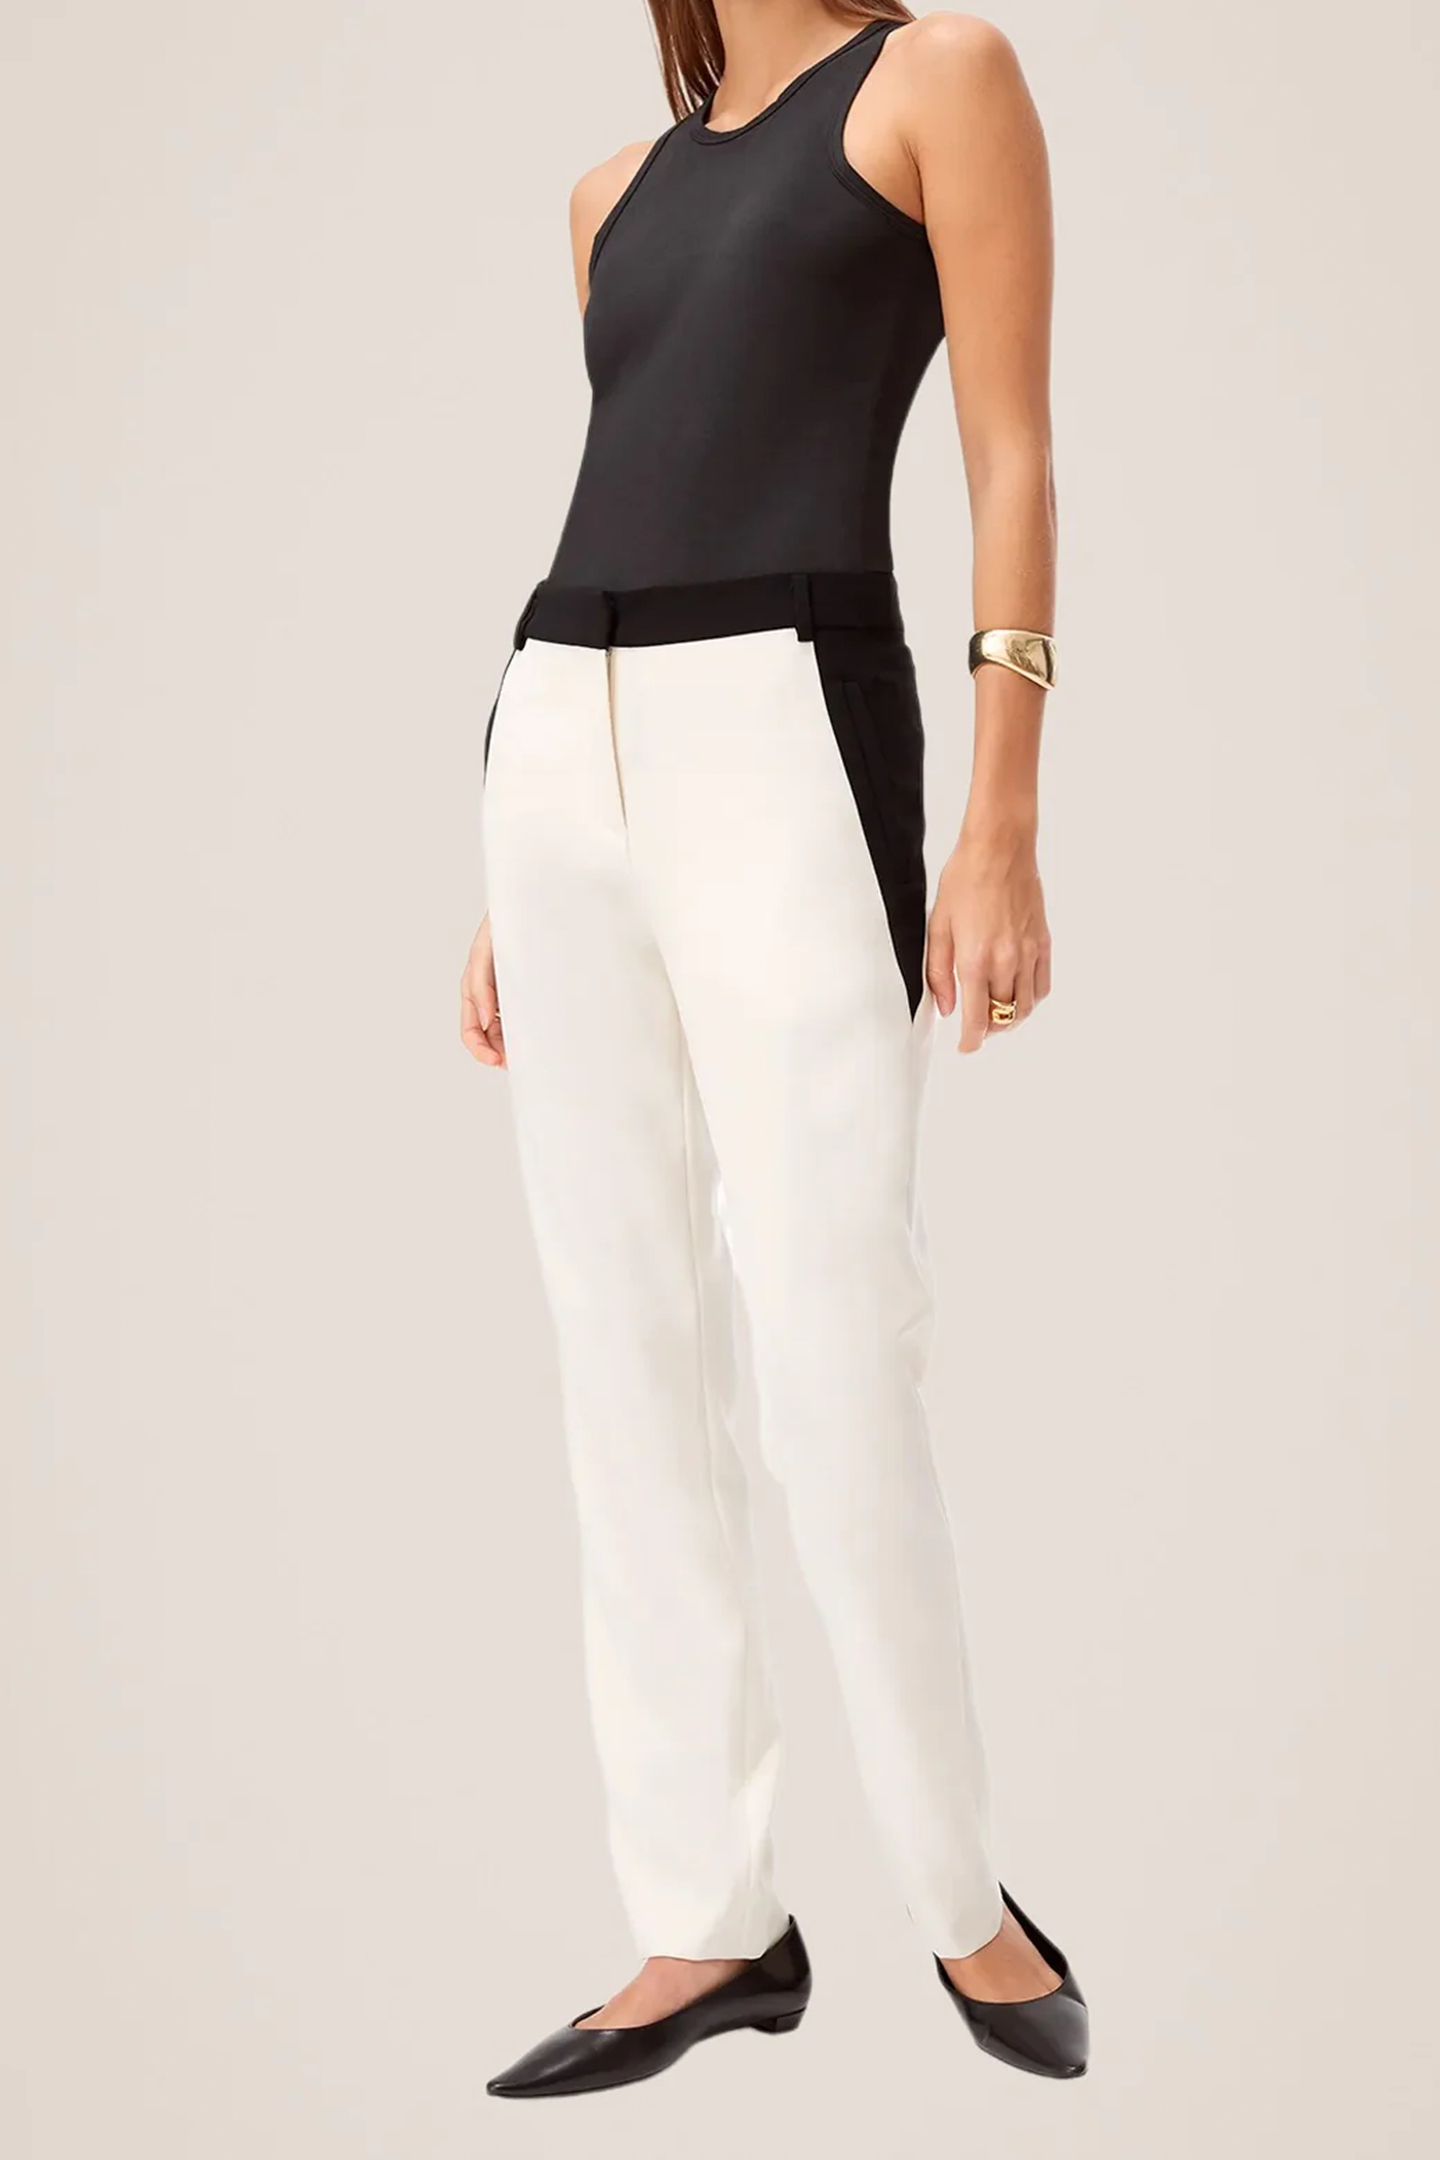 Cream & Black Reagan Side Slice Trouser Pant Designer Fashion - Toccin